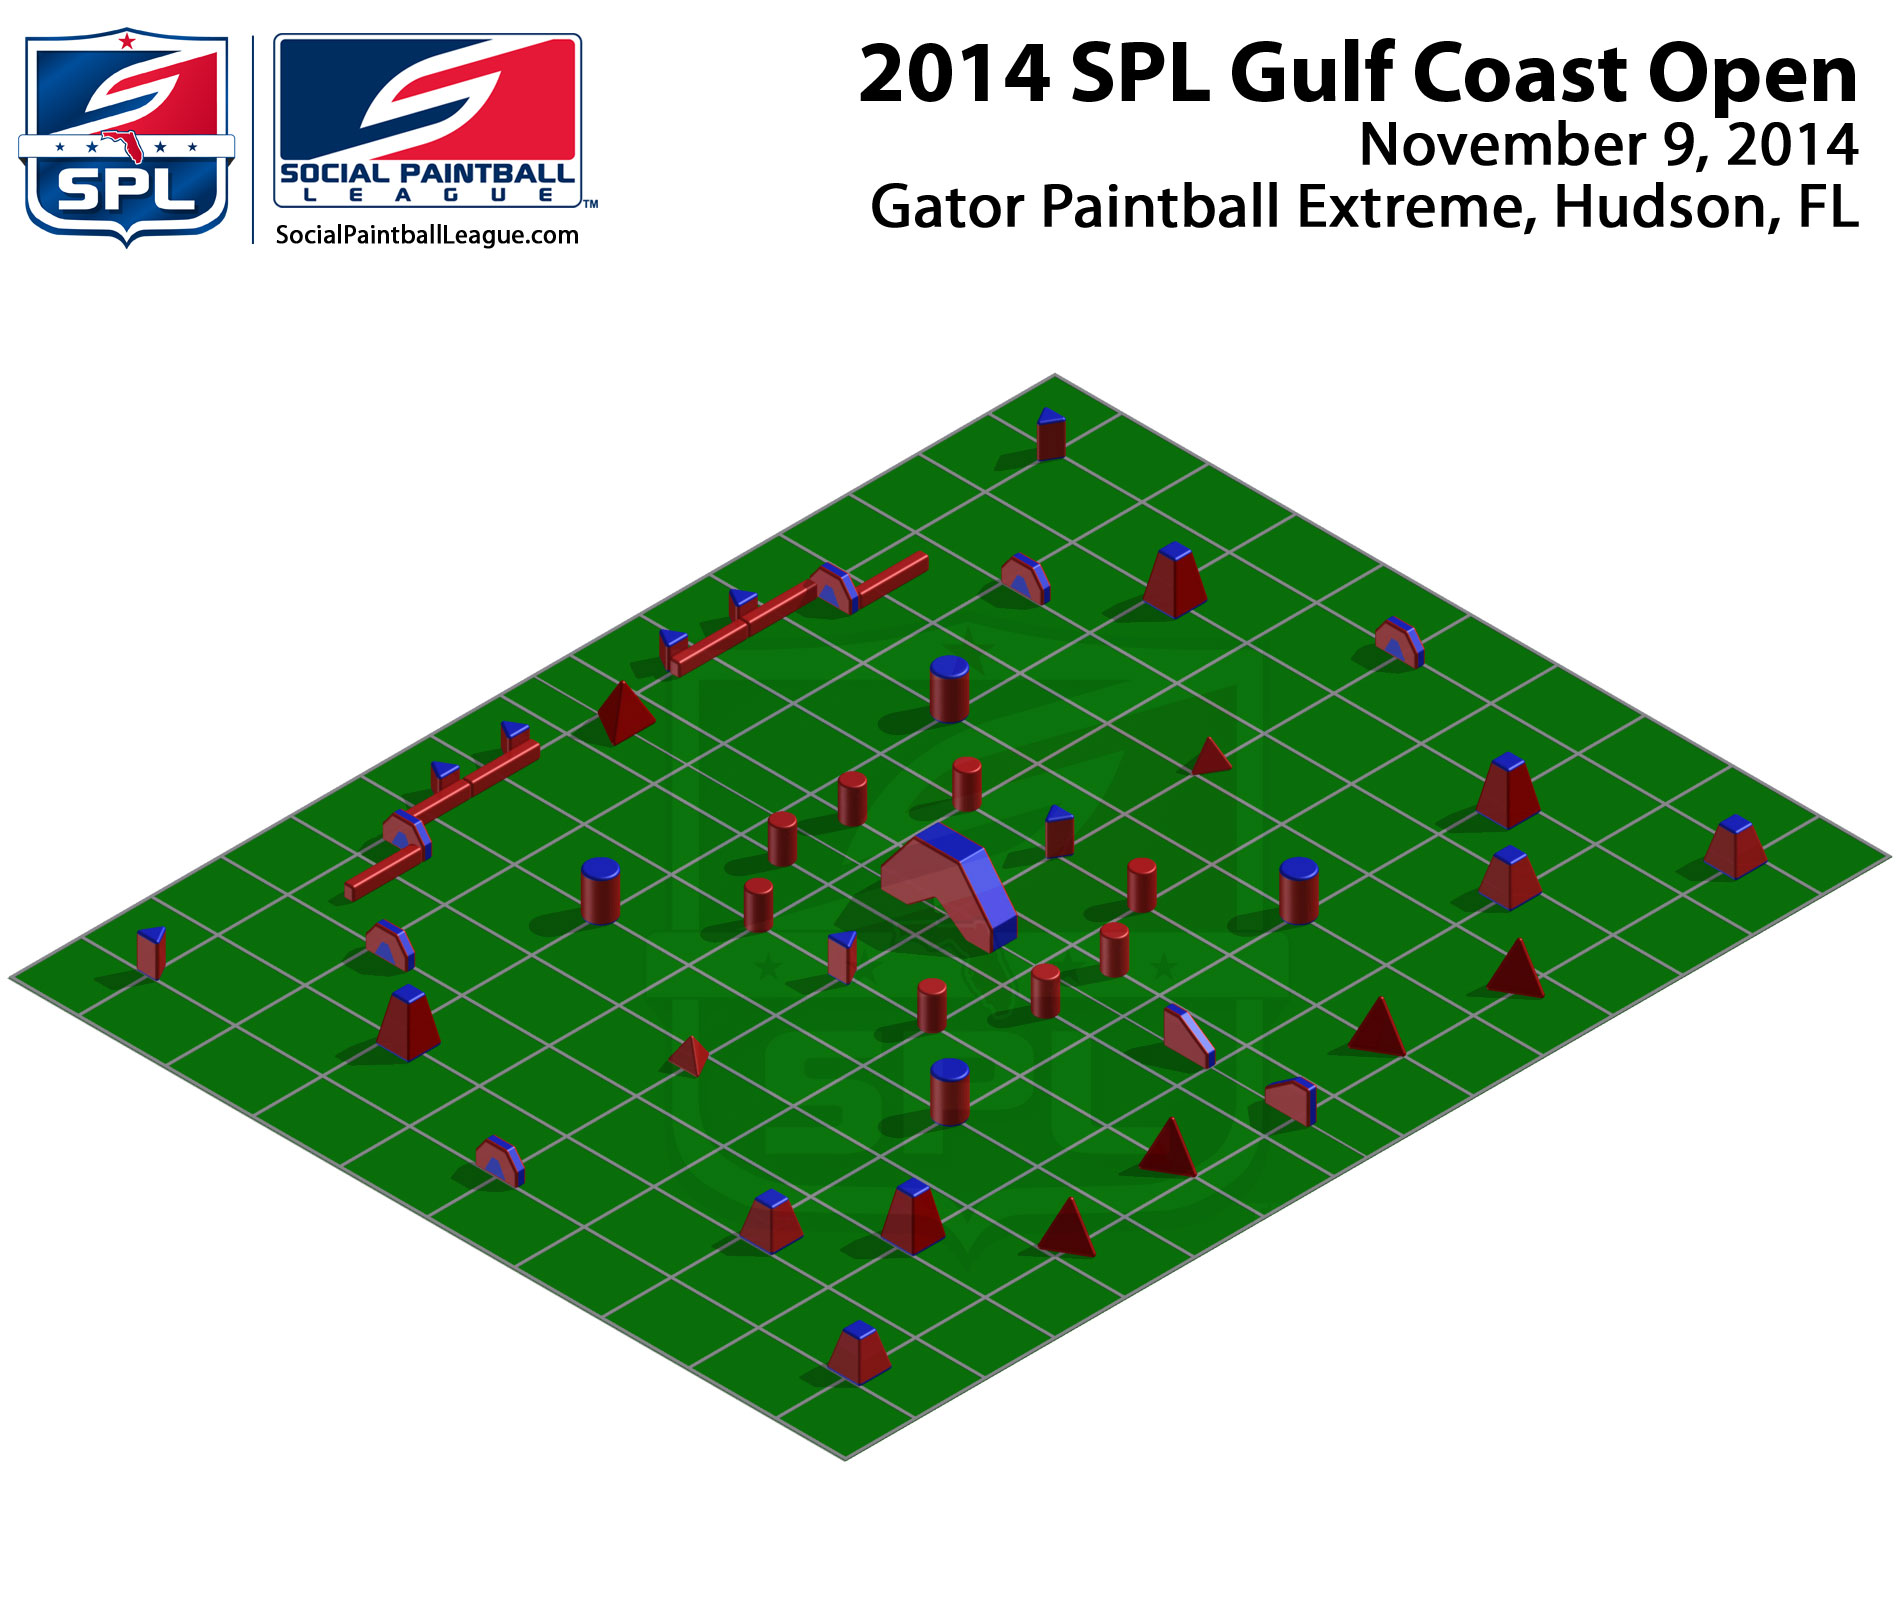 2014 SPL GCO layout